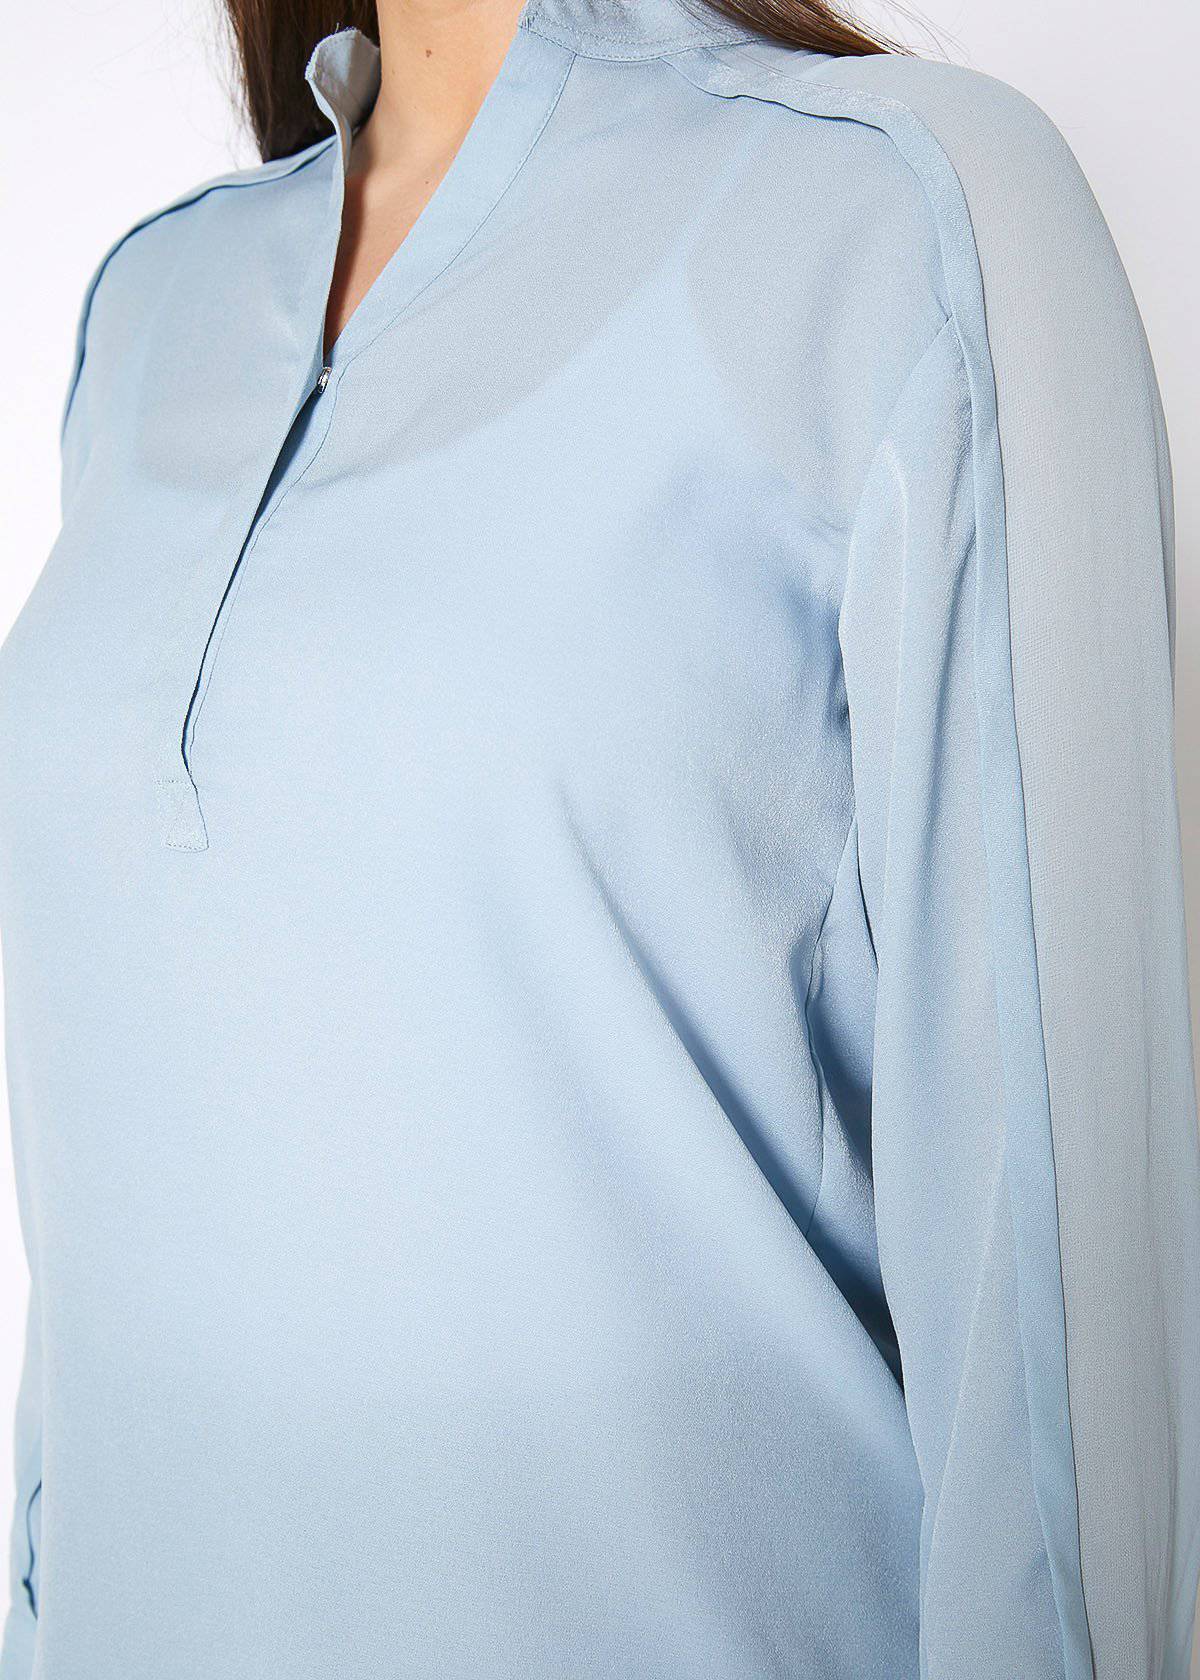 Women's Mandarin Collar Shirt Blouse In Cashmere Blue by Shop at Konus